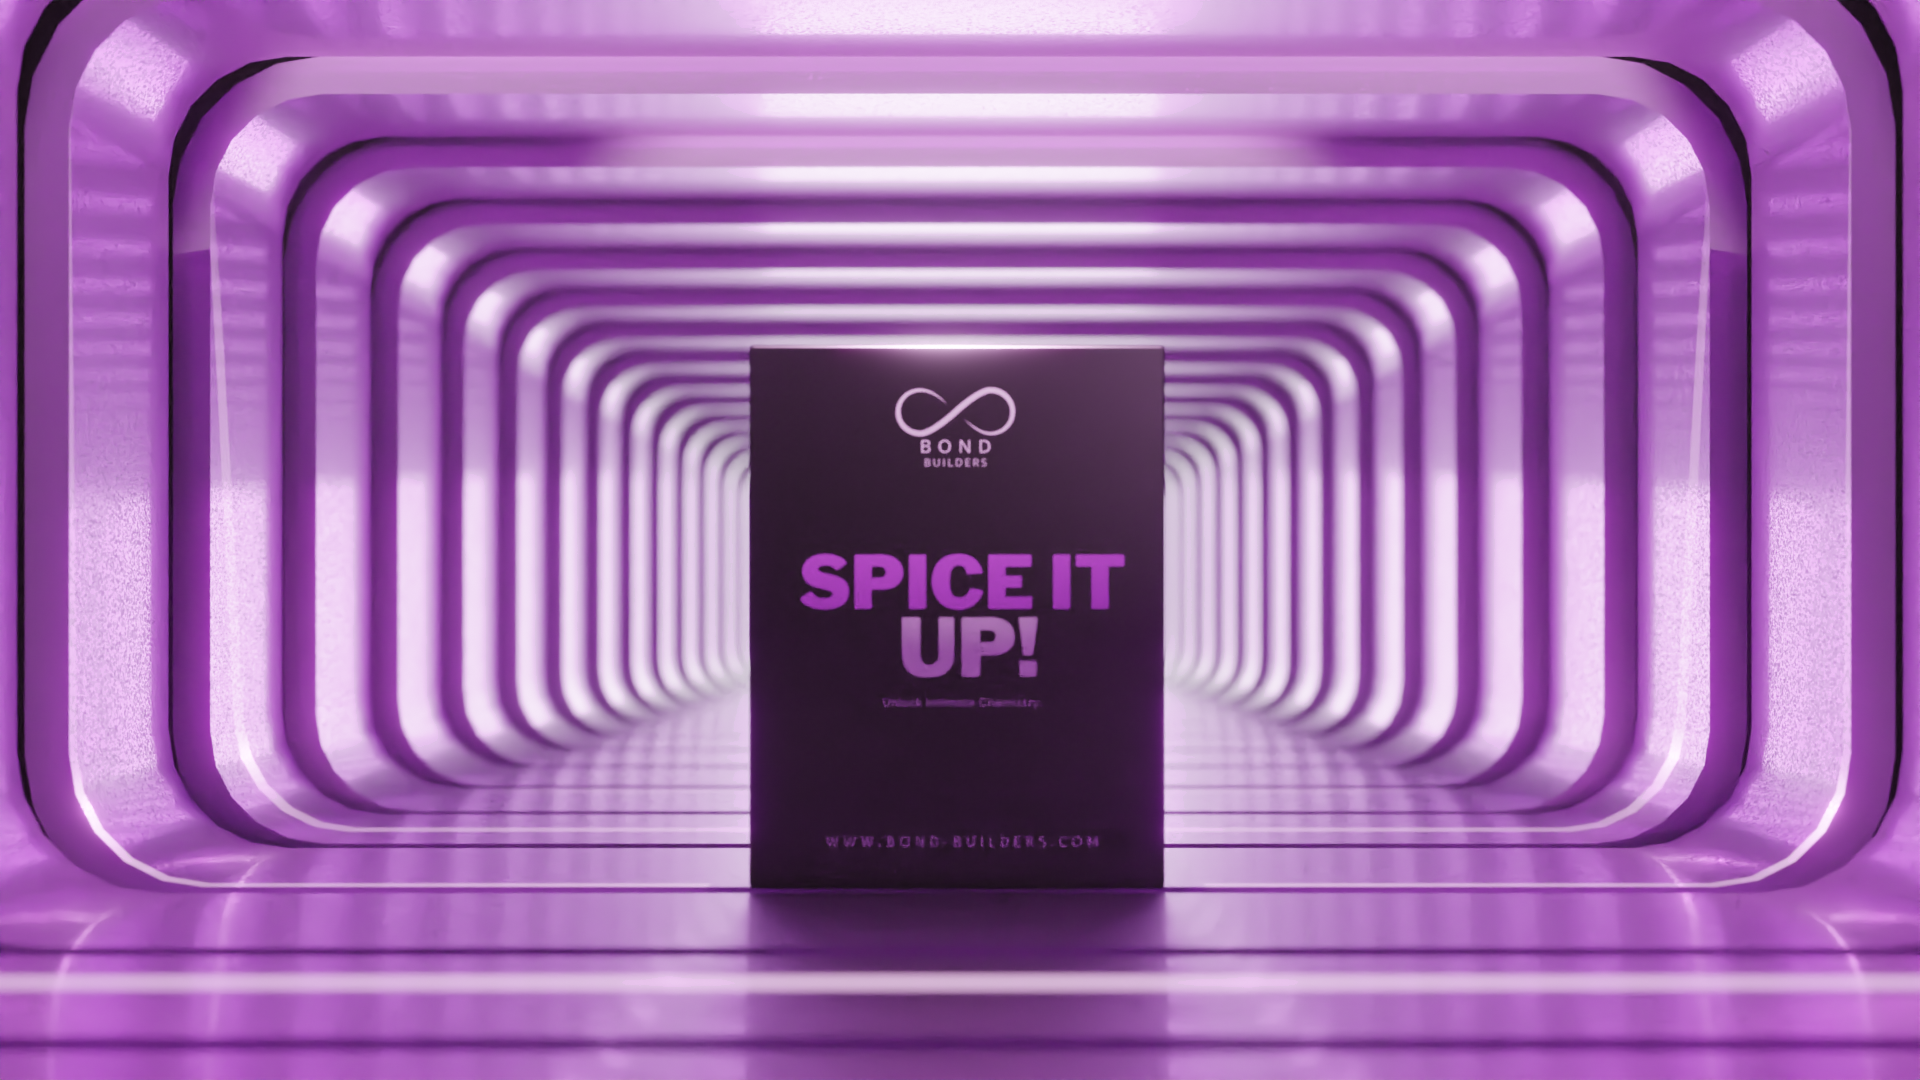 Spice it Up! – Bond Builders